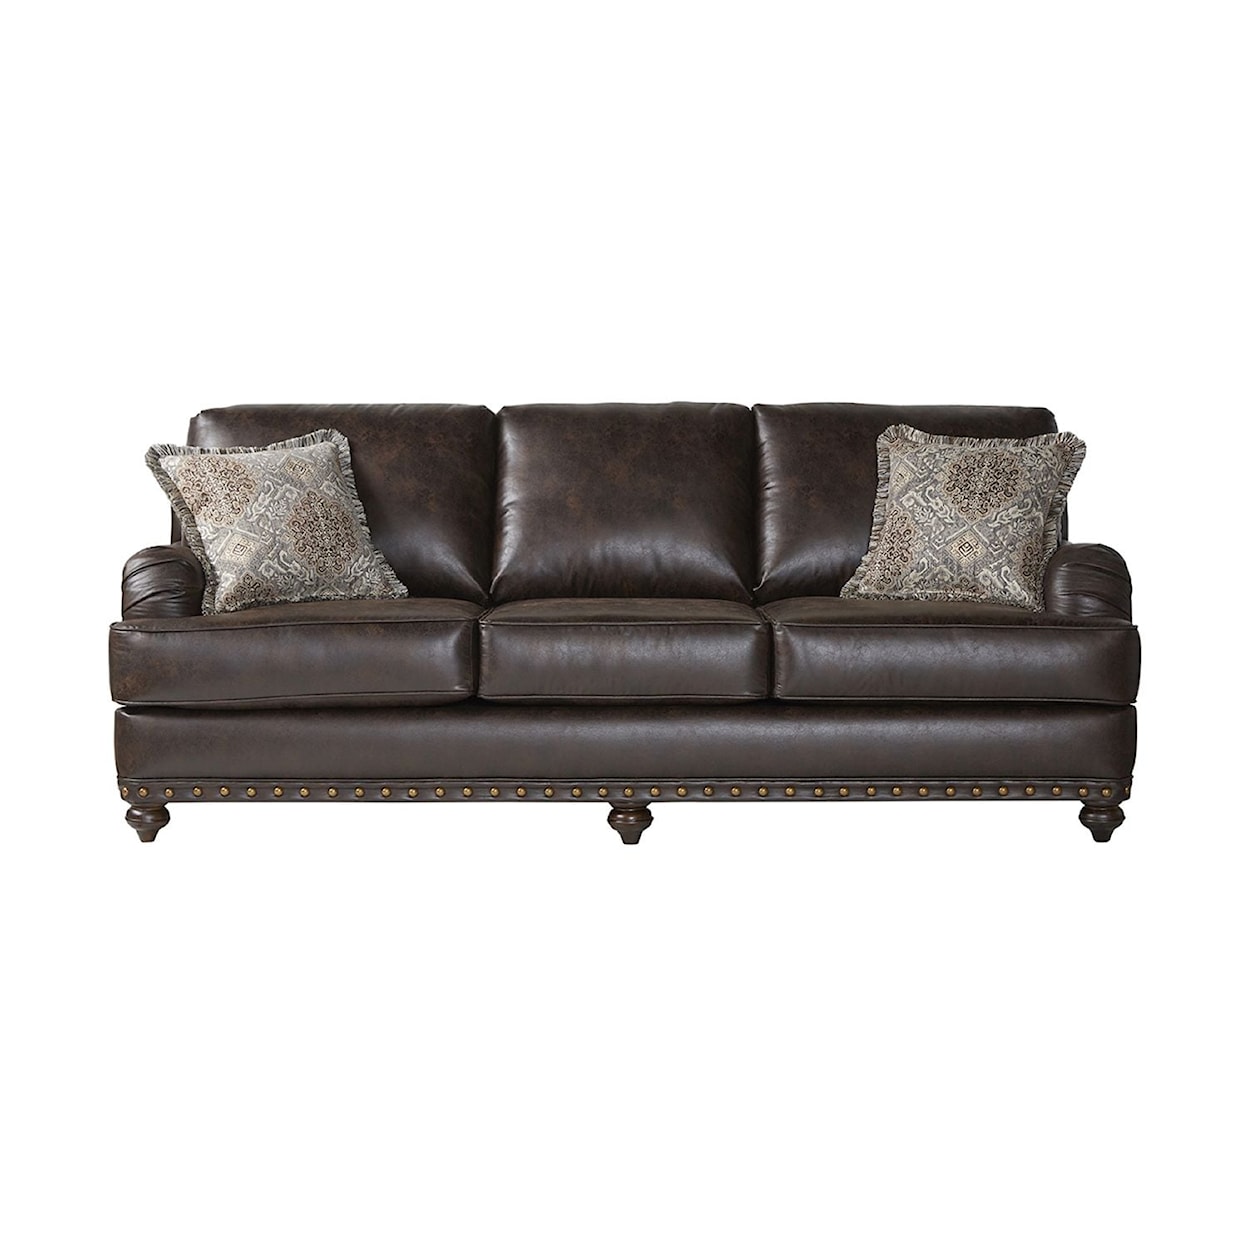 Hughes Furniture 17255 Sofa